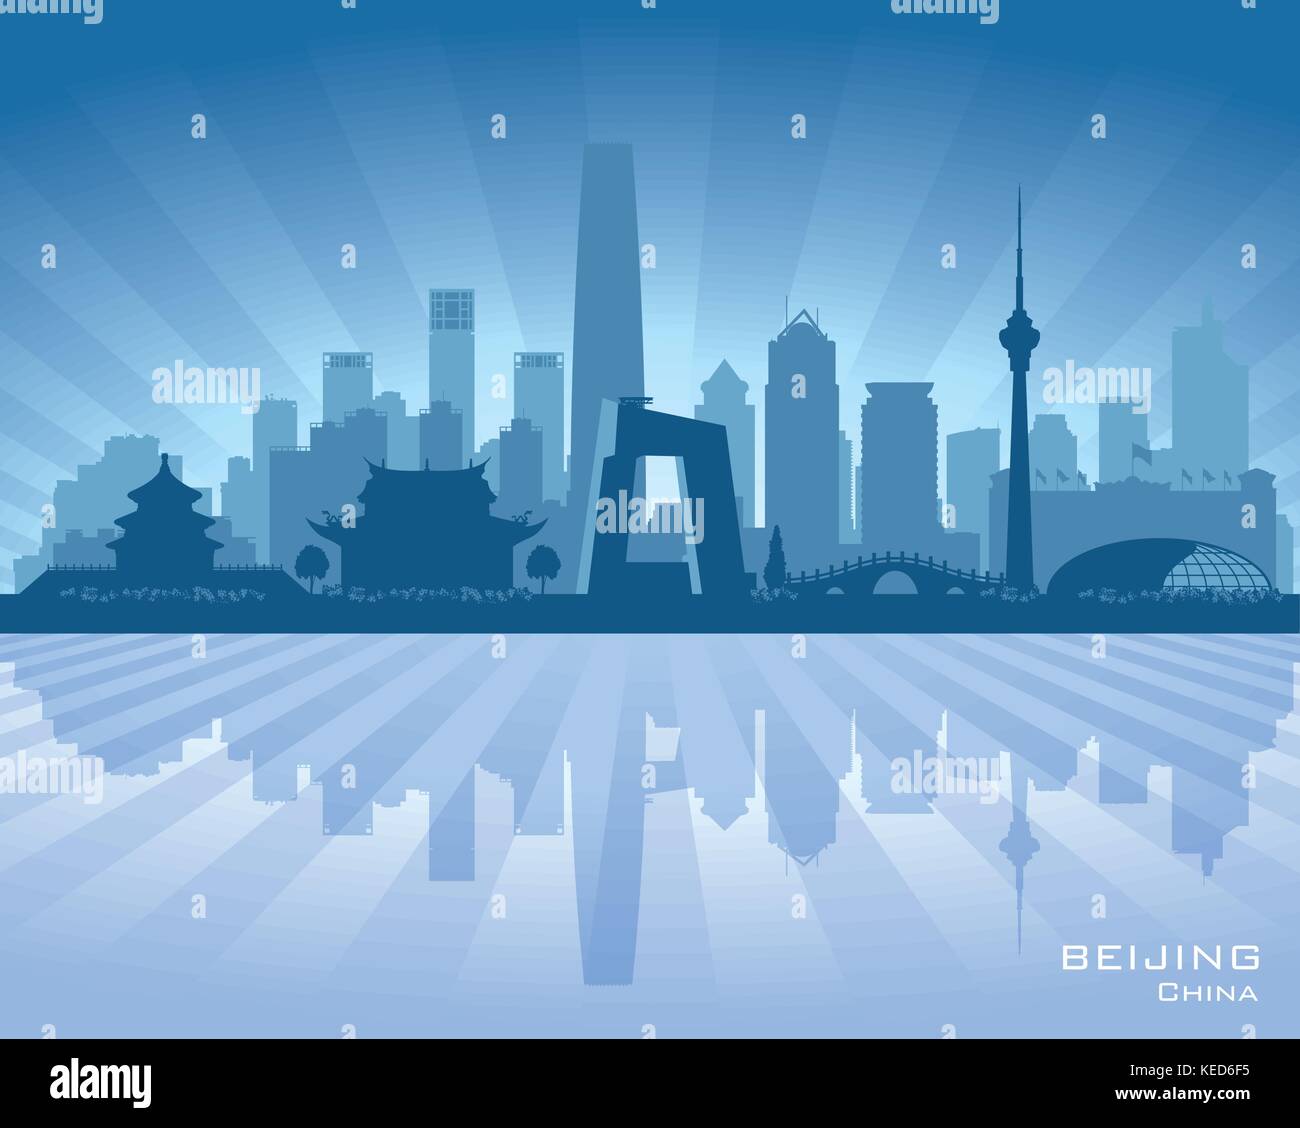 Beijing China city skyline vector silhouette illustration Stock Vector